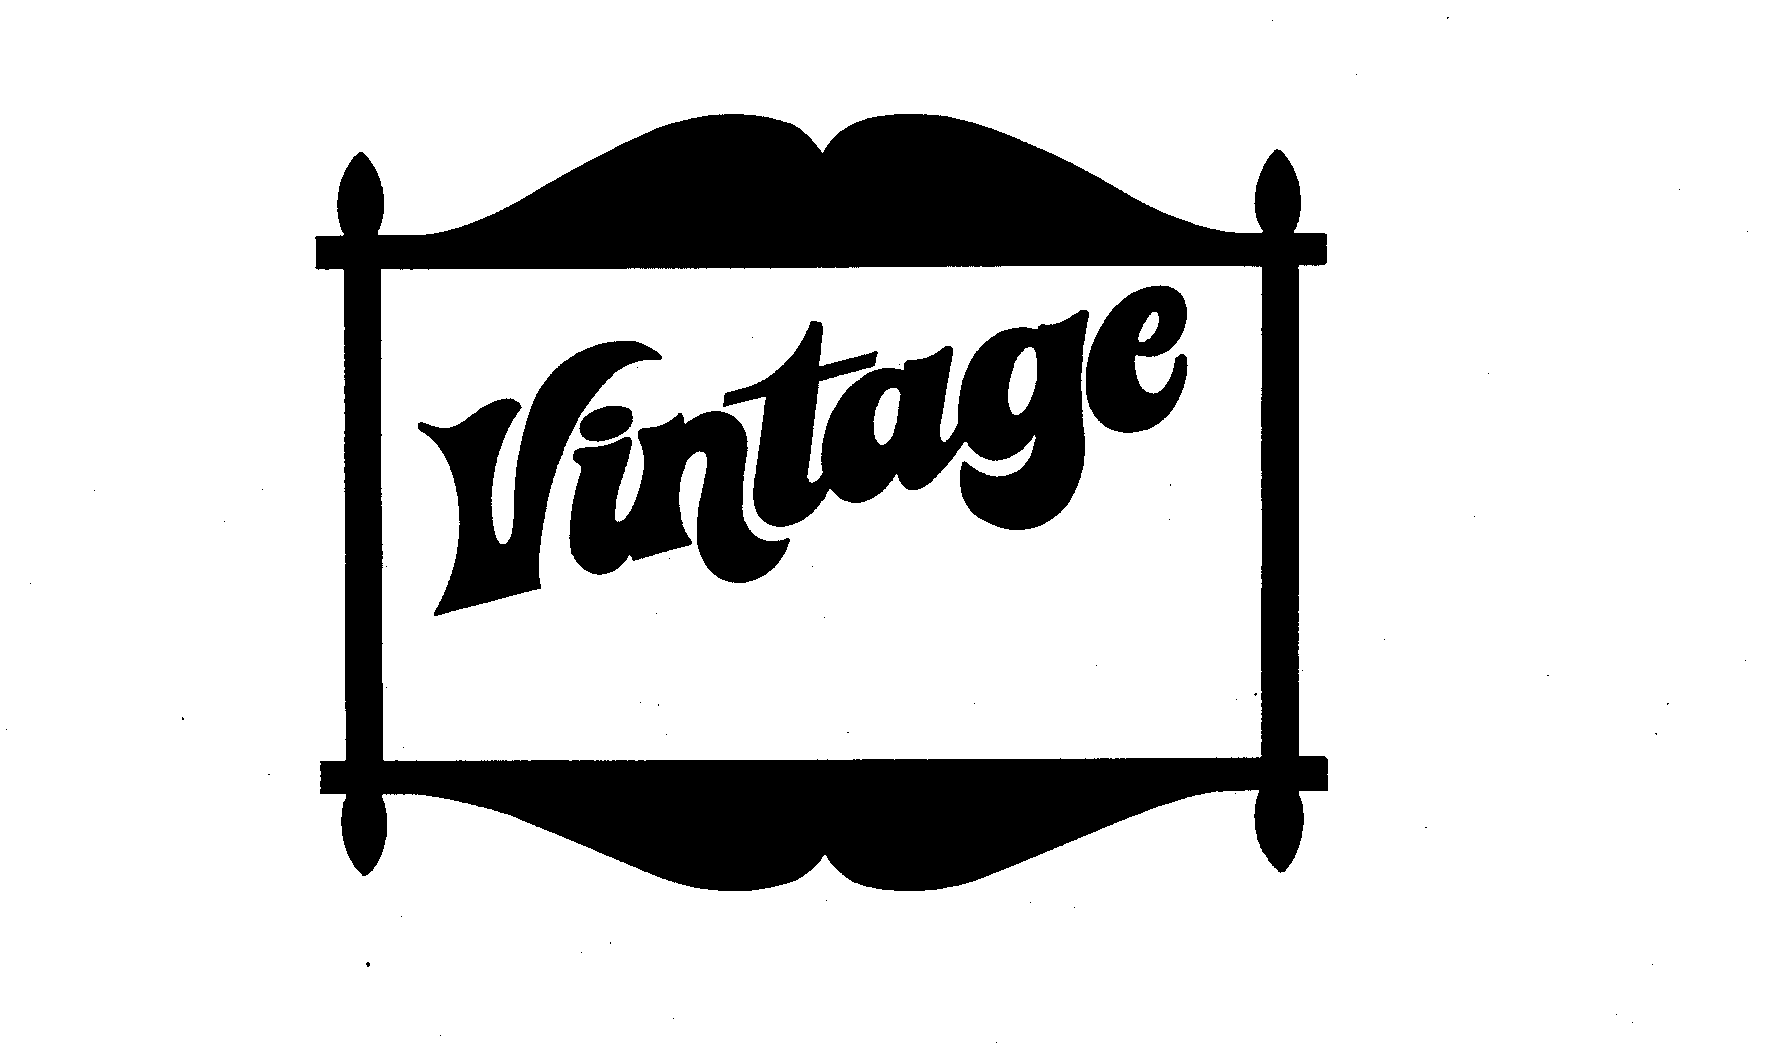 Trademark Logo VINTAGE